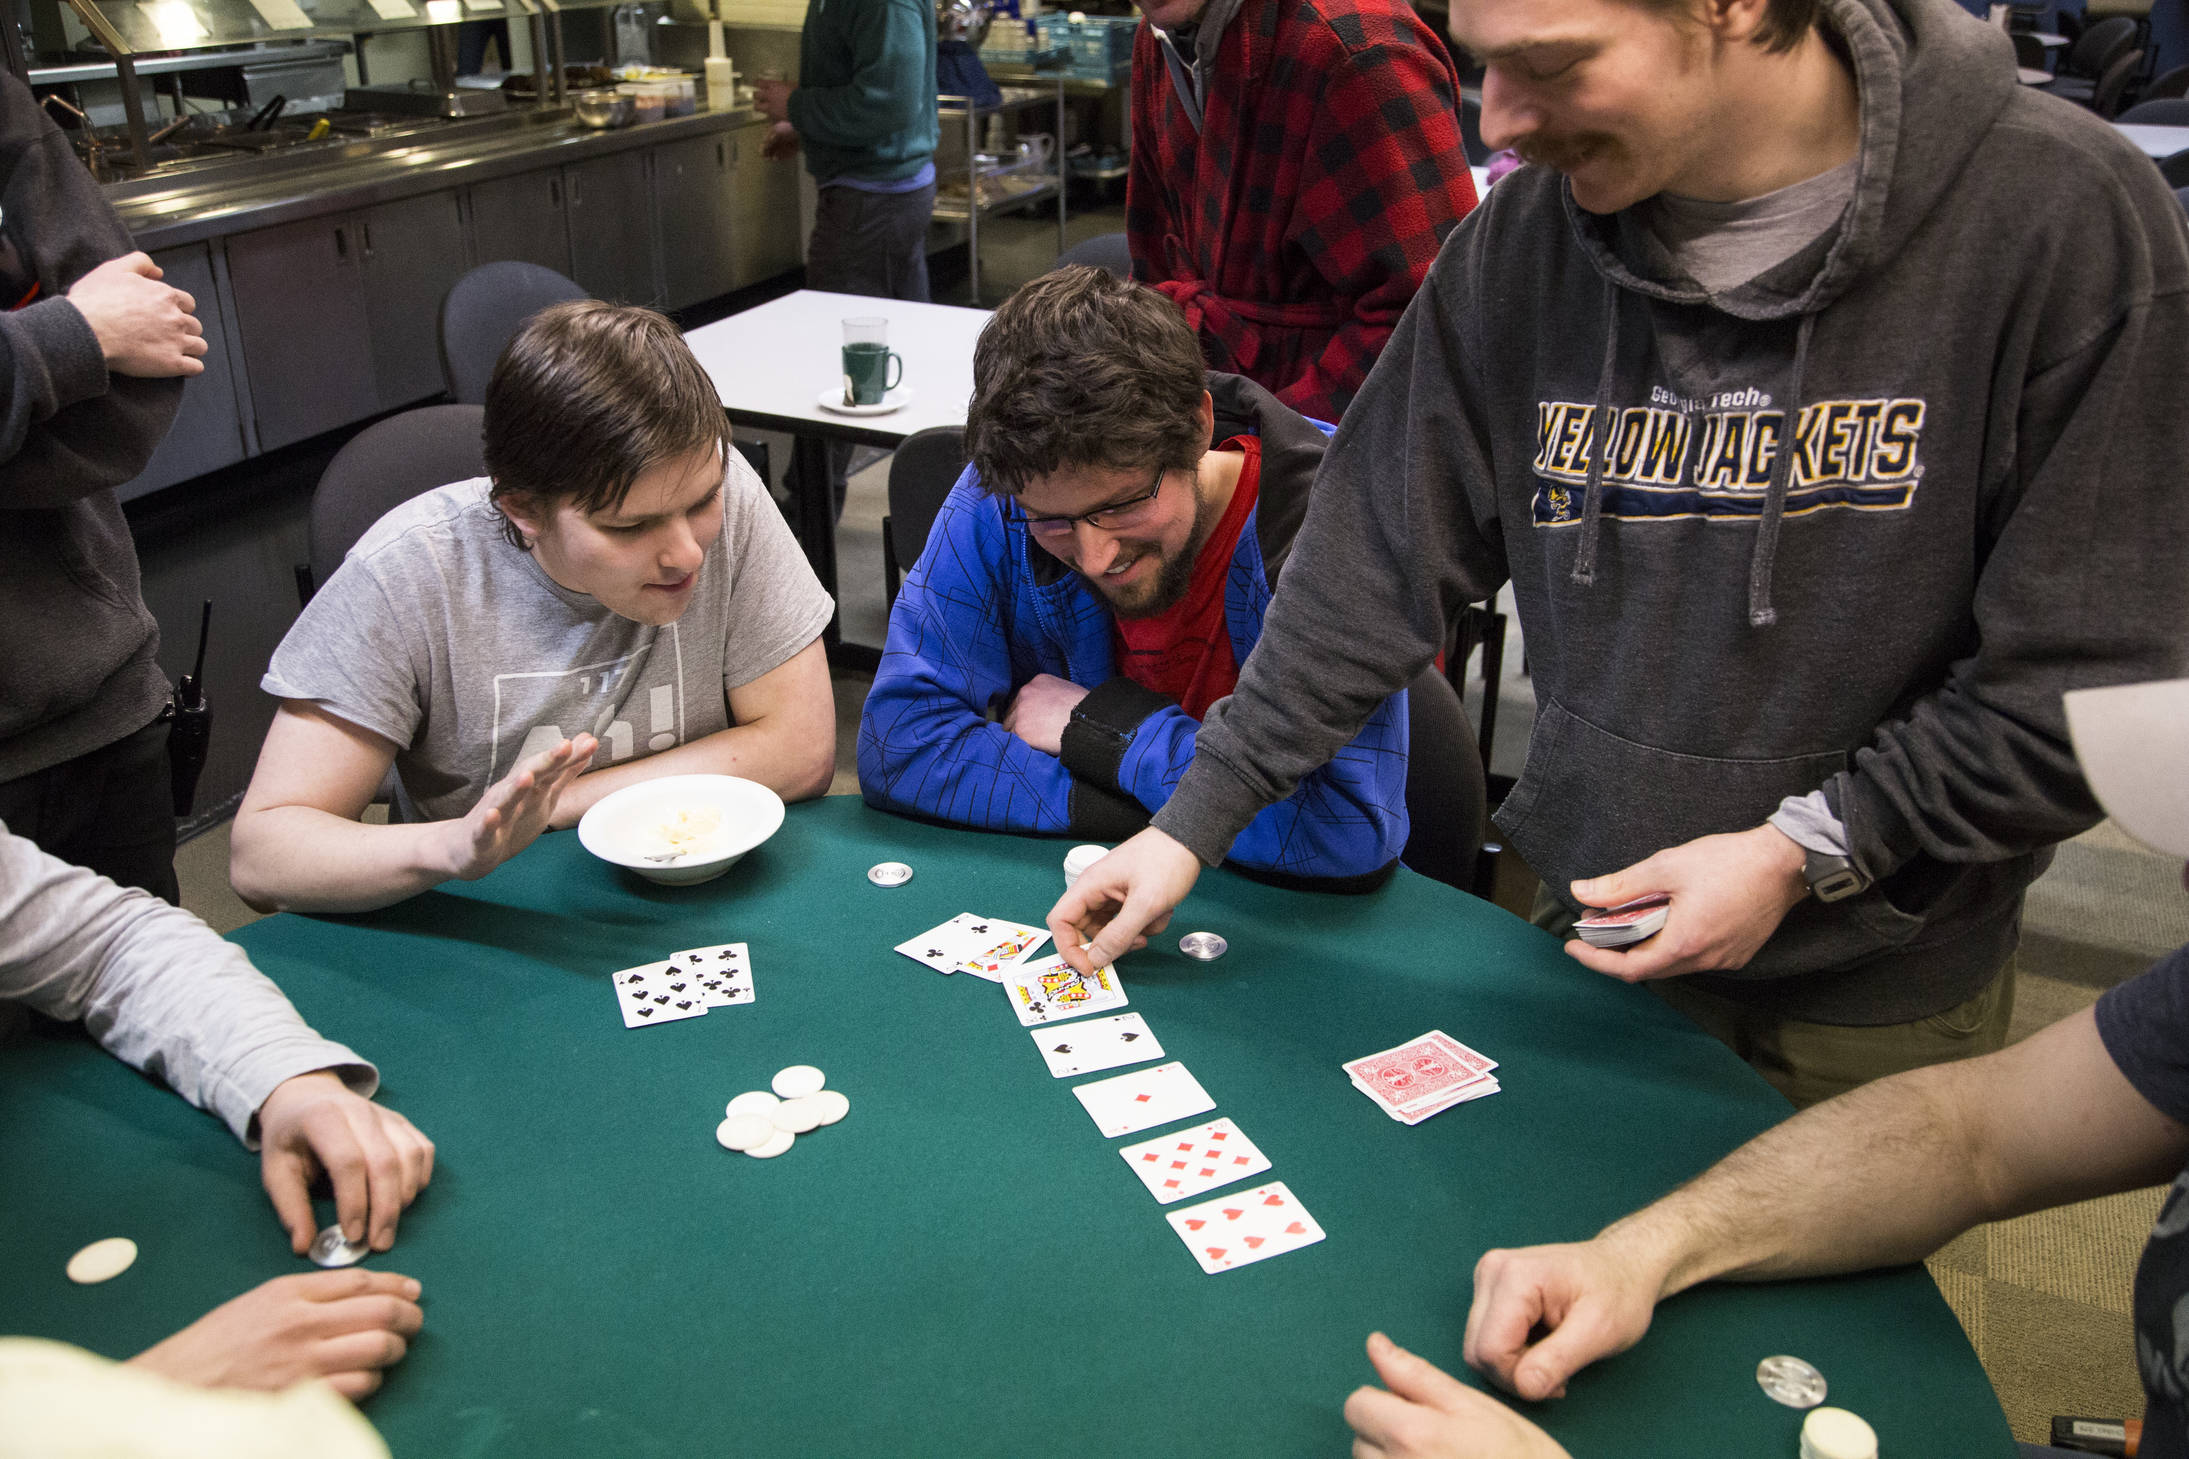 idwinter poker tournament (Photo: Gavin Chensue).